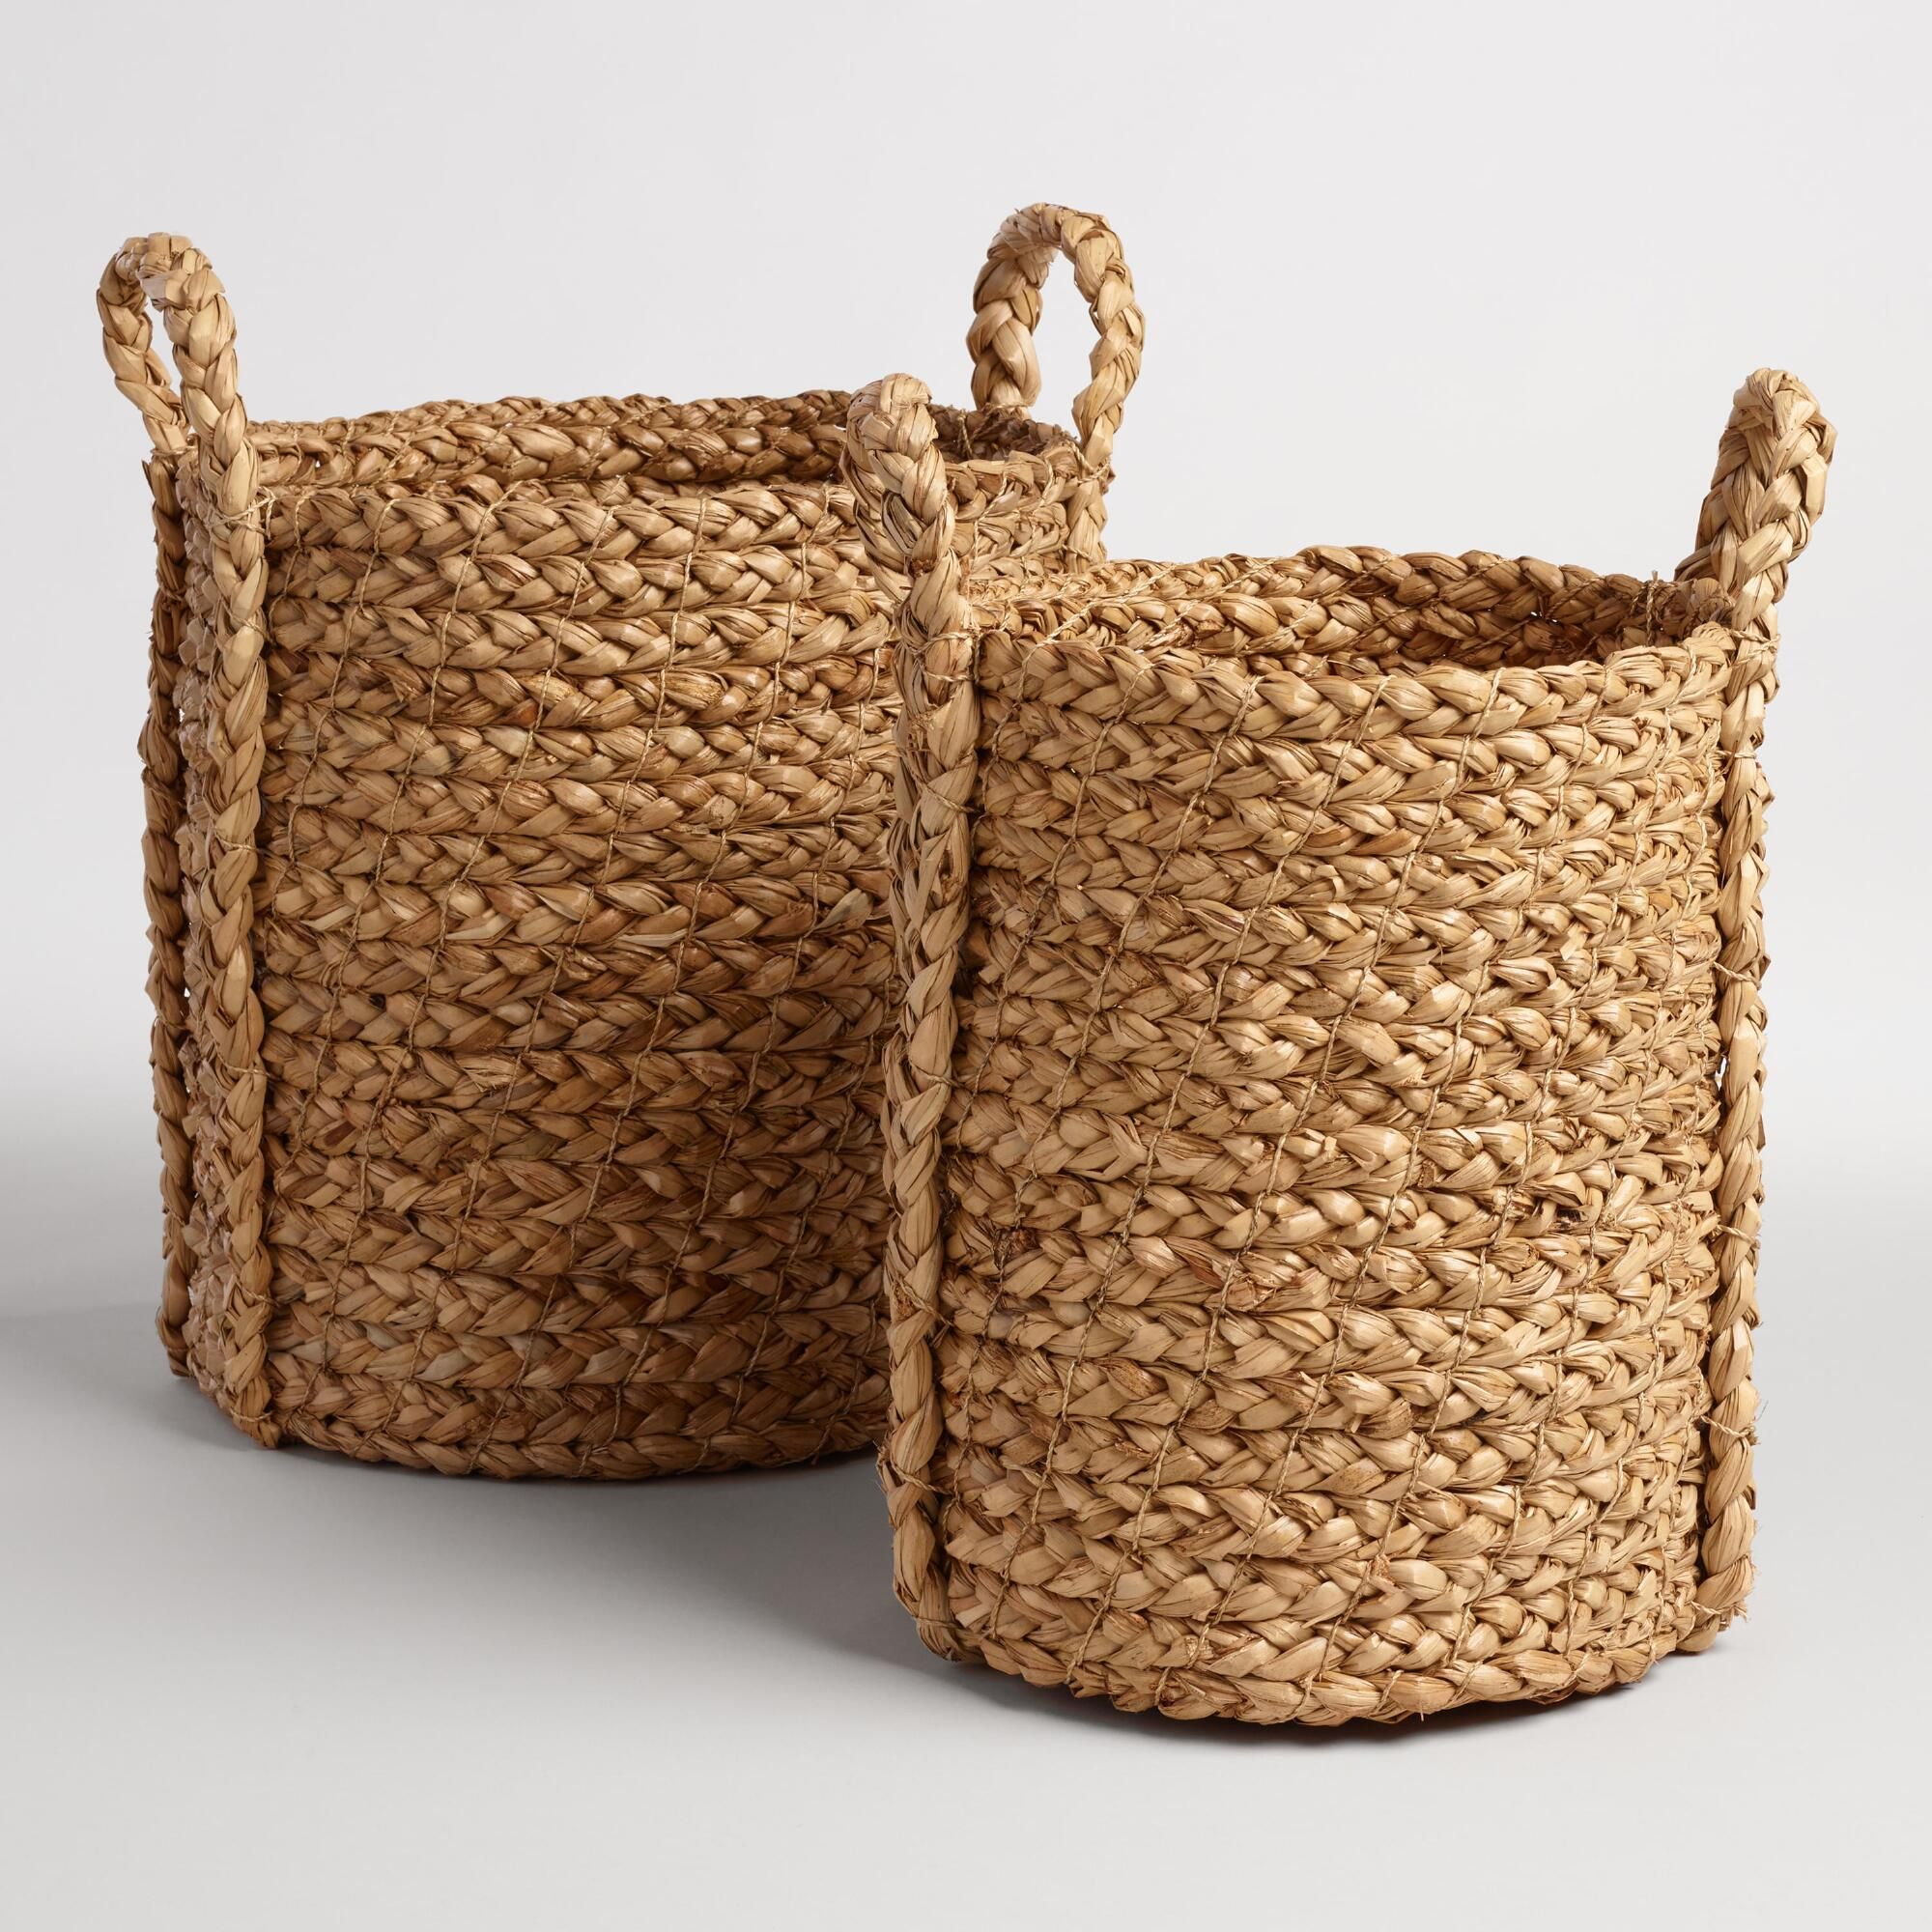 Natural Hyacinth Braided Cameron Tote Baskets - Natural Fiber - Small by World Market Small | World Market